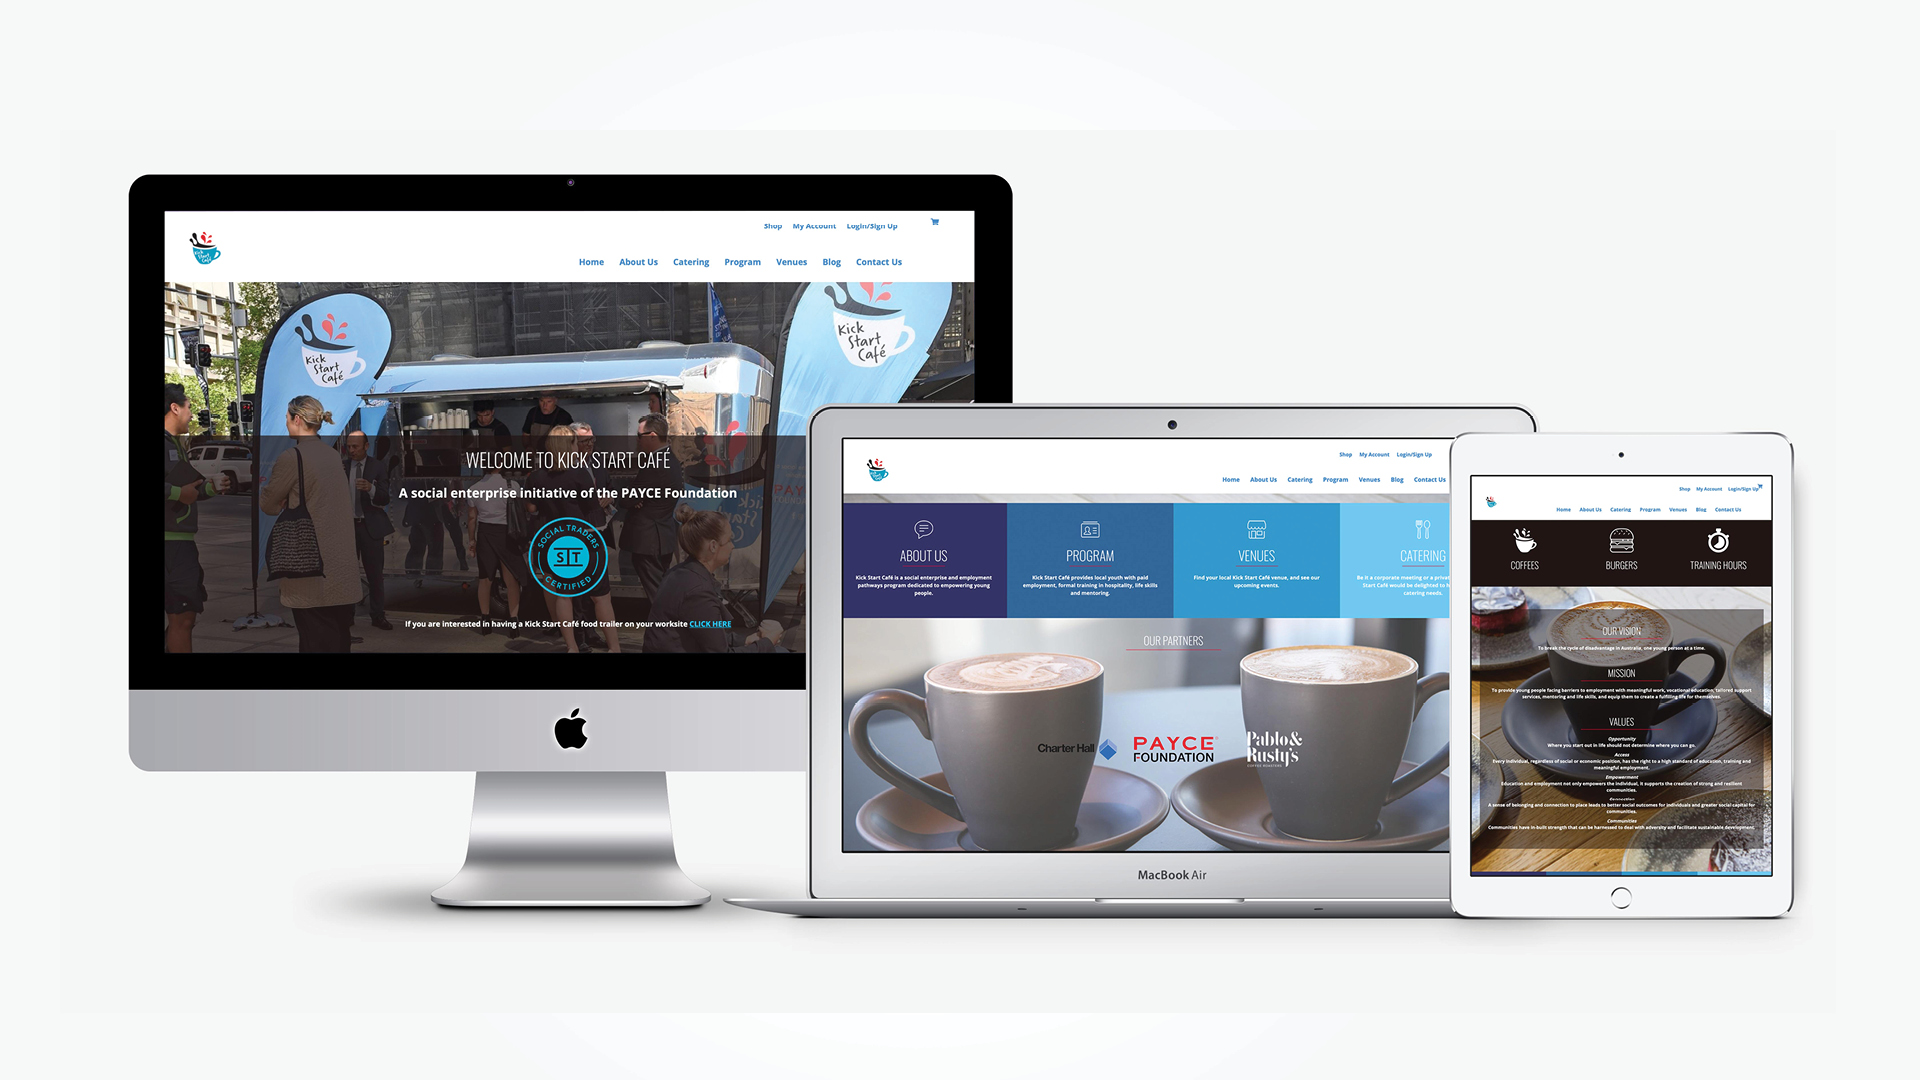 Payce Foundation-Kickstart Cafe website design by Think creative Agency